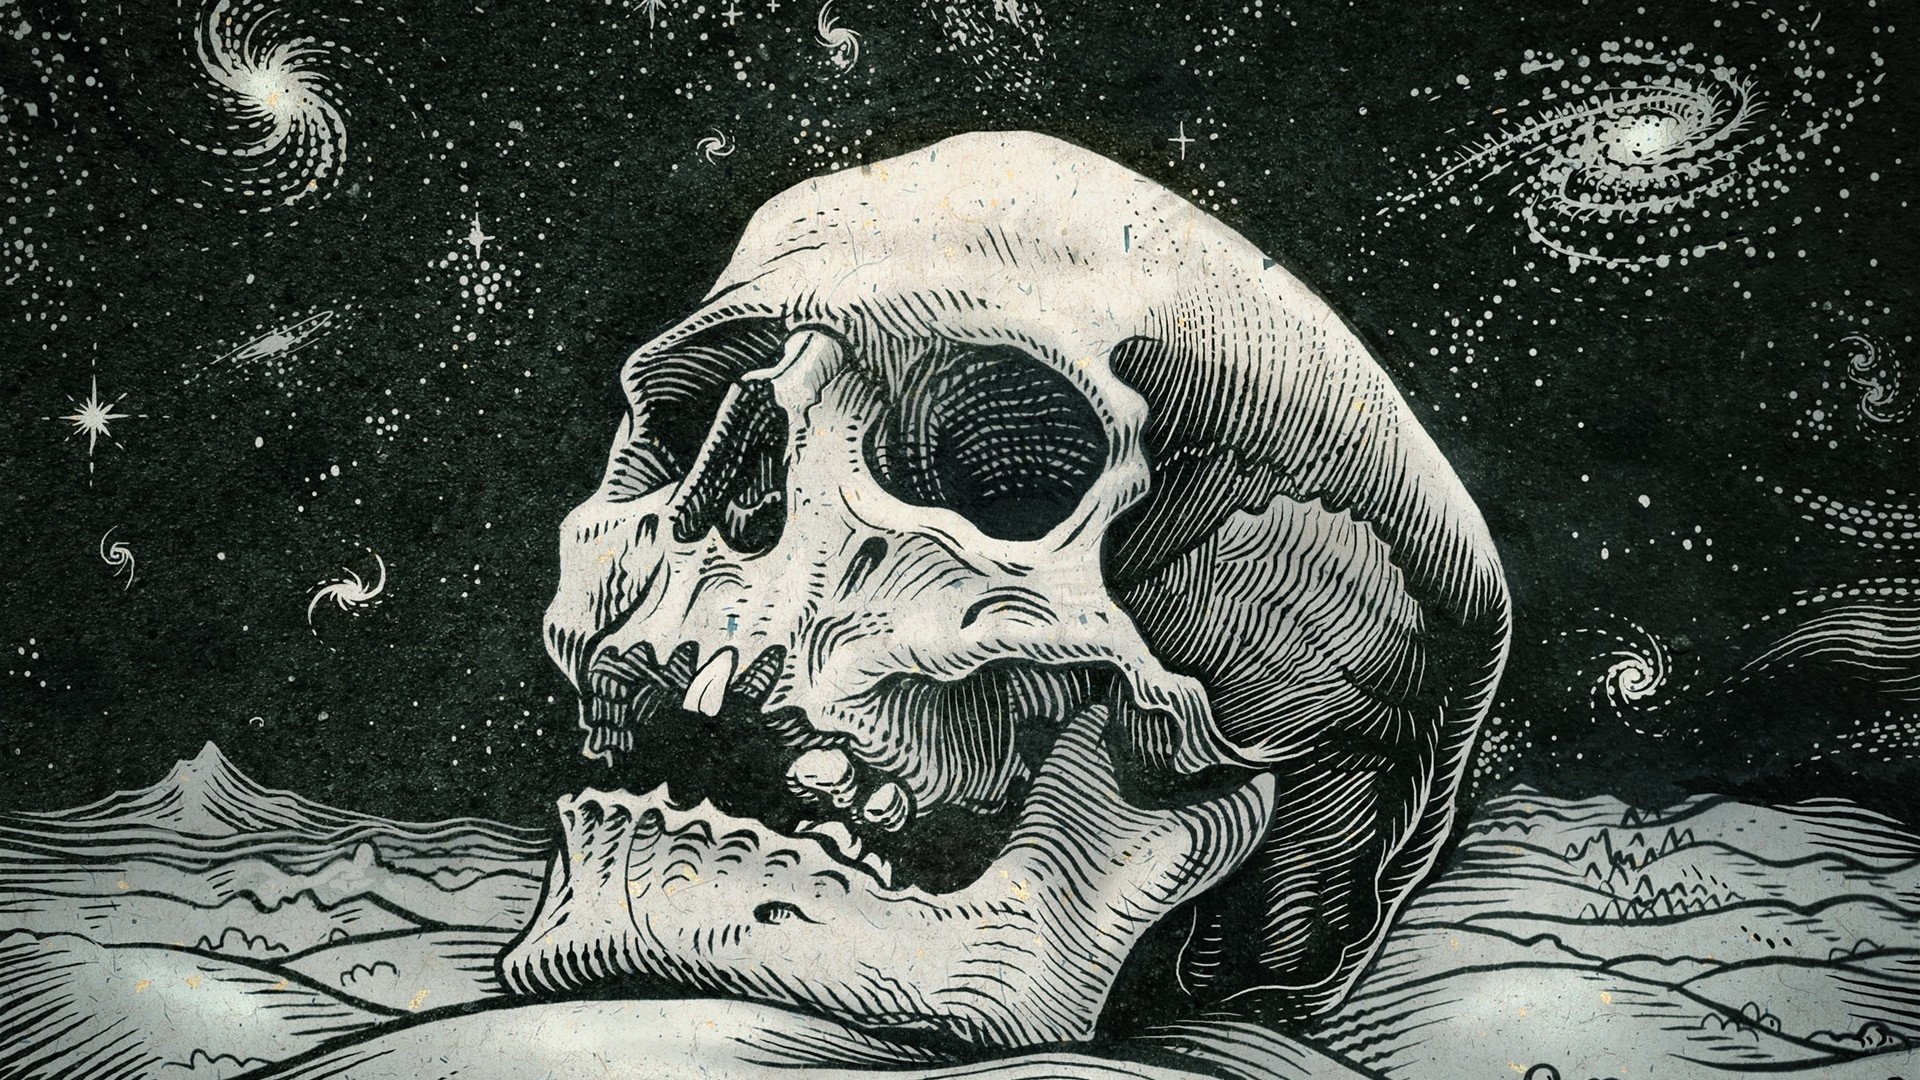 1920x1080 Cool Wallpaper of Skull | HD Wallpapers | Pinterest | Skull wallpaper, Hd skull  wallpapers and Wallpaper